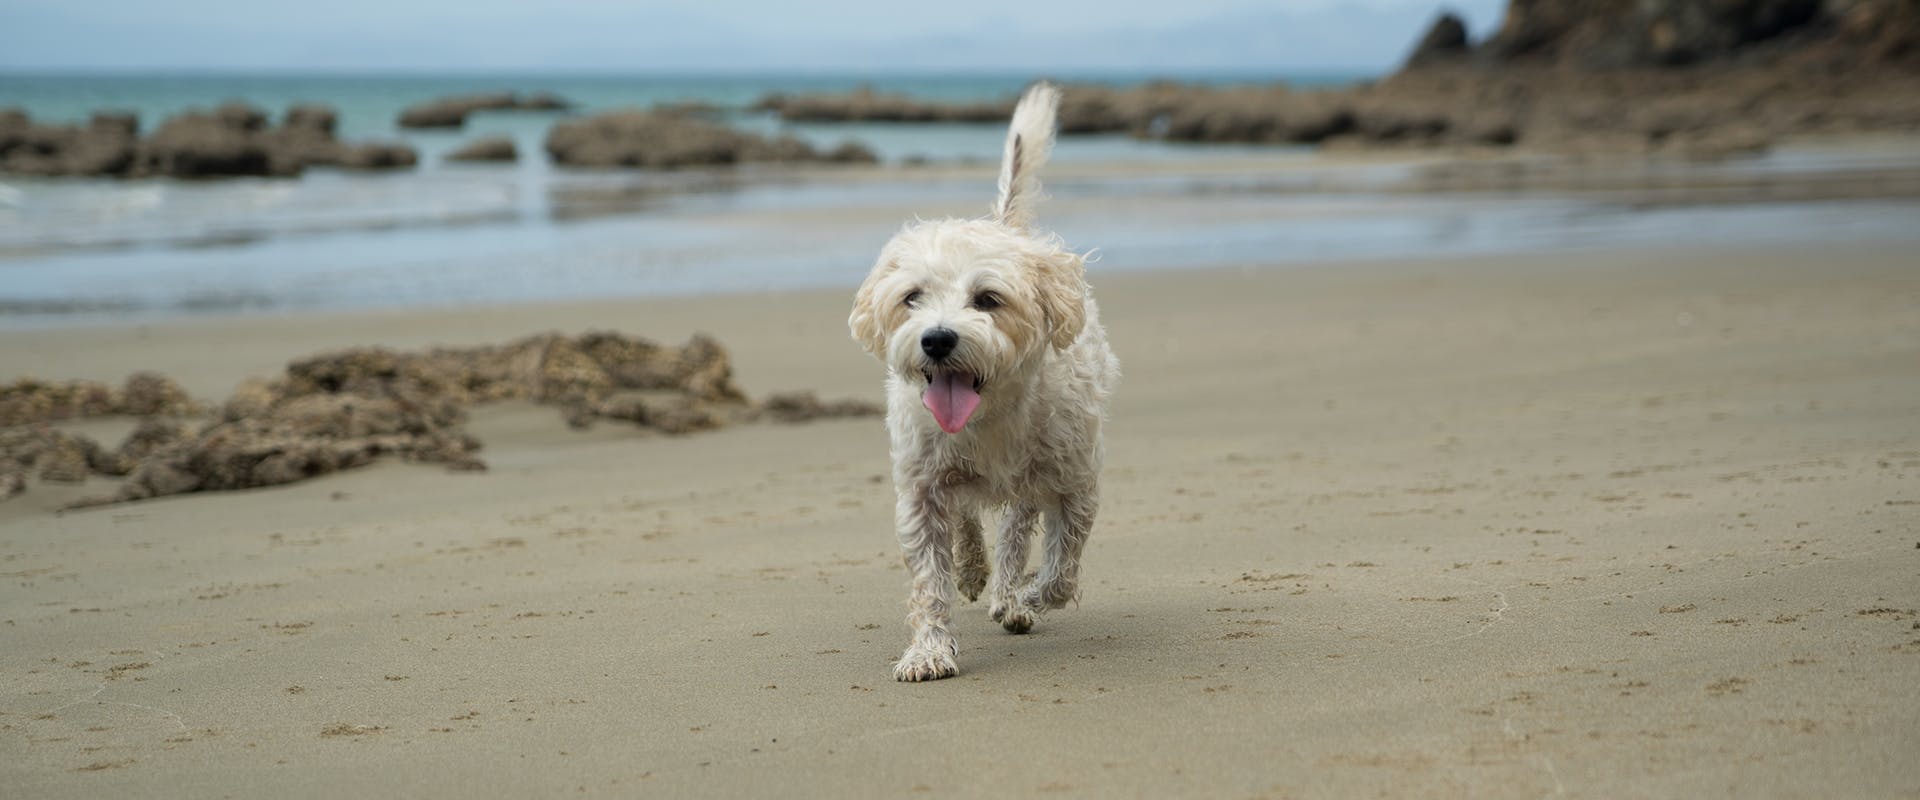 A Cavachon (a mix dog breed) running along a beach